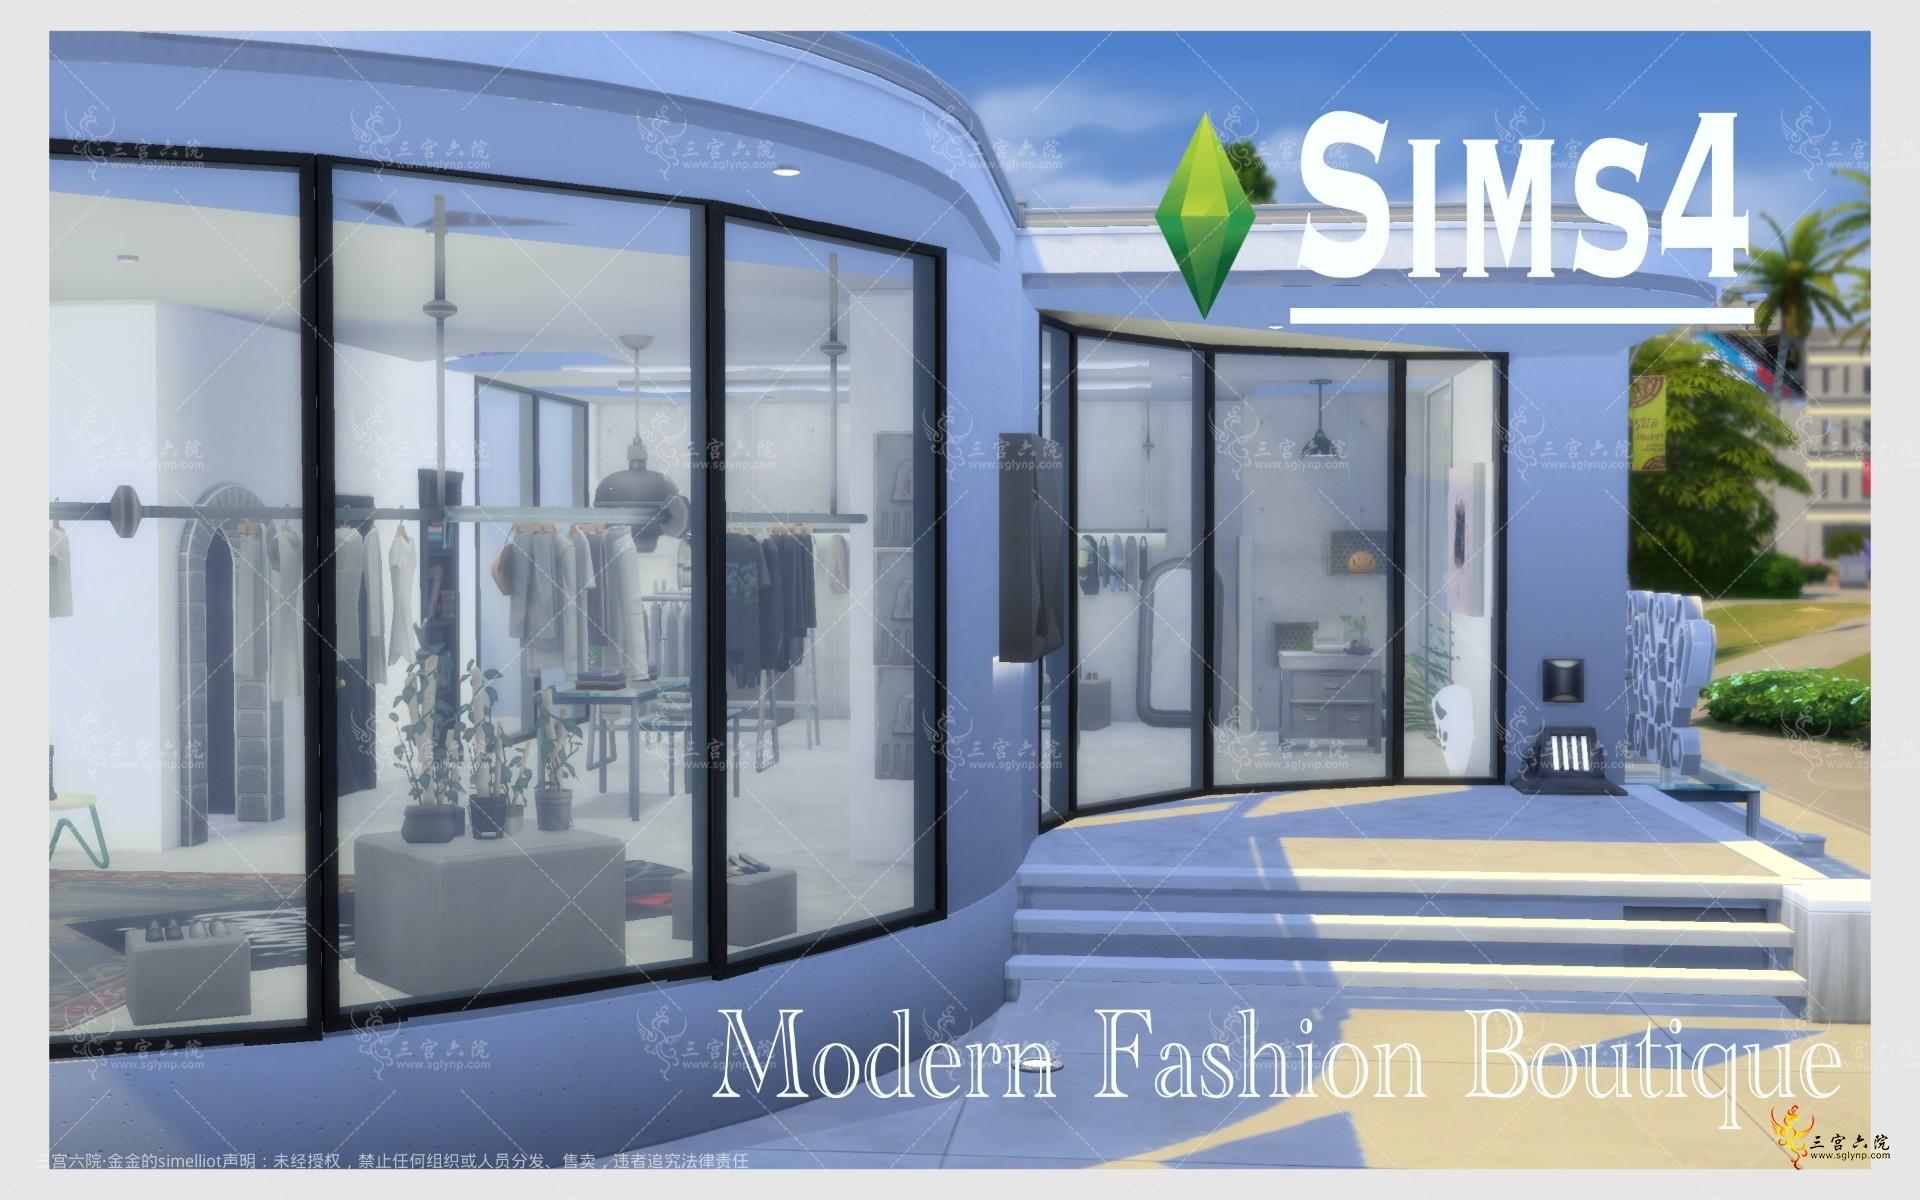 Modern Fashion Boutique 2.jpg